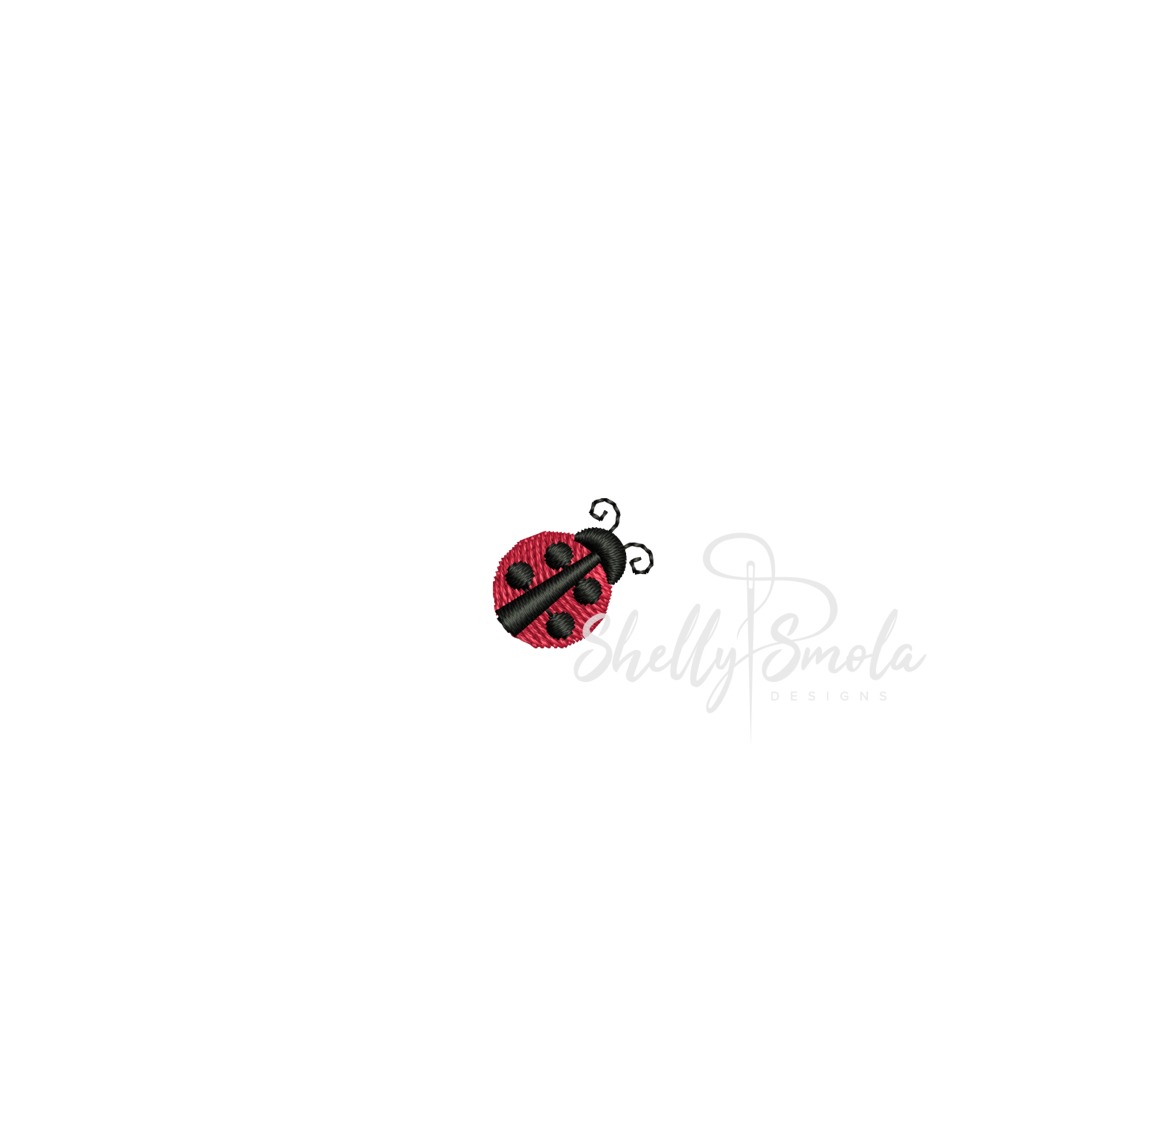 Garden Gadgets Ladybug by Shelly Smola